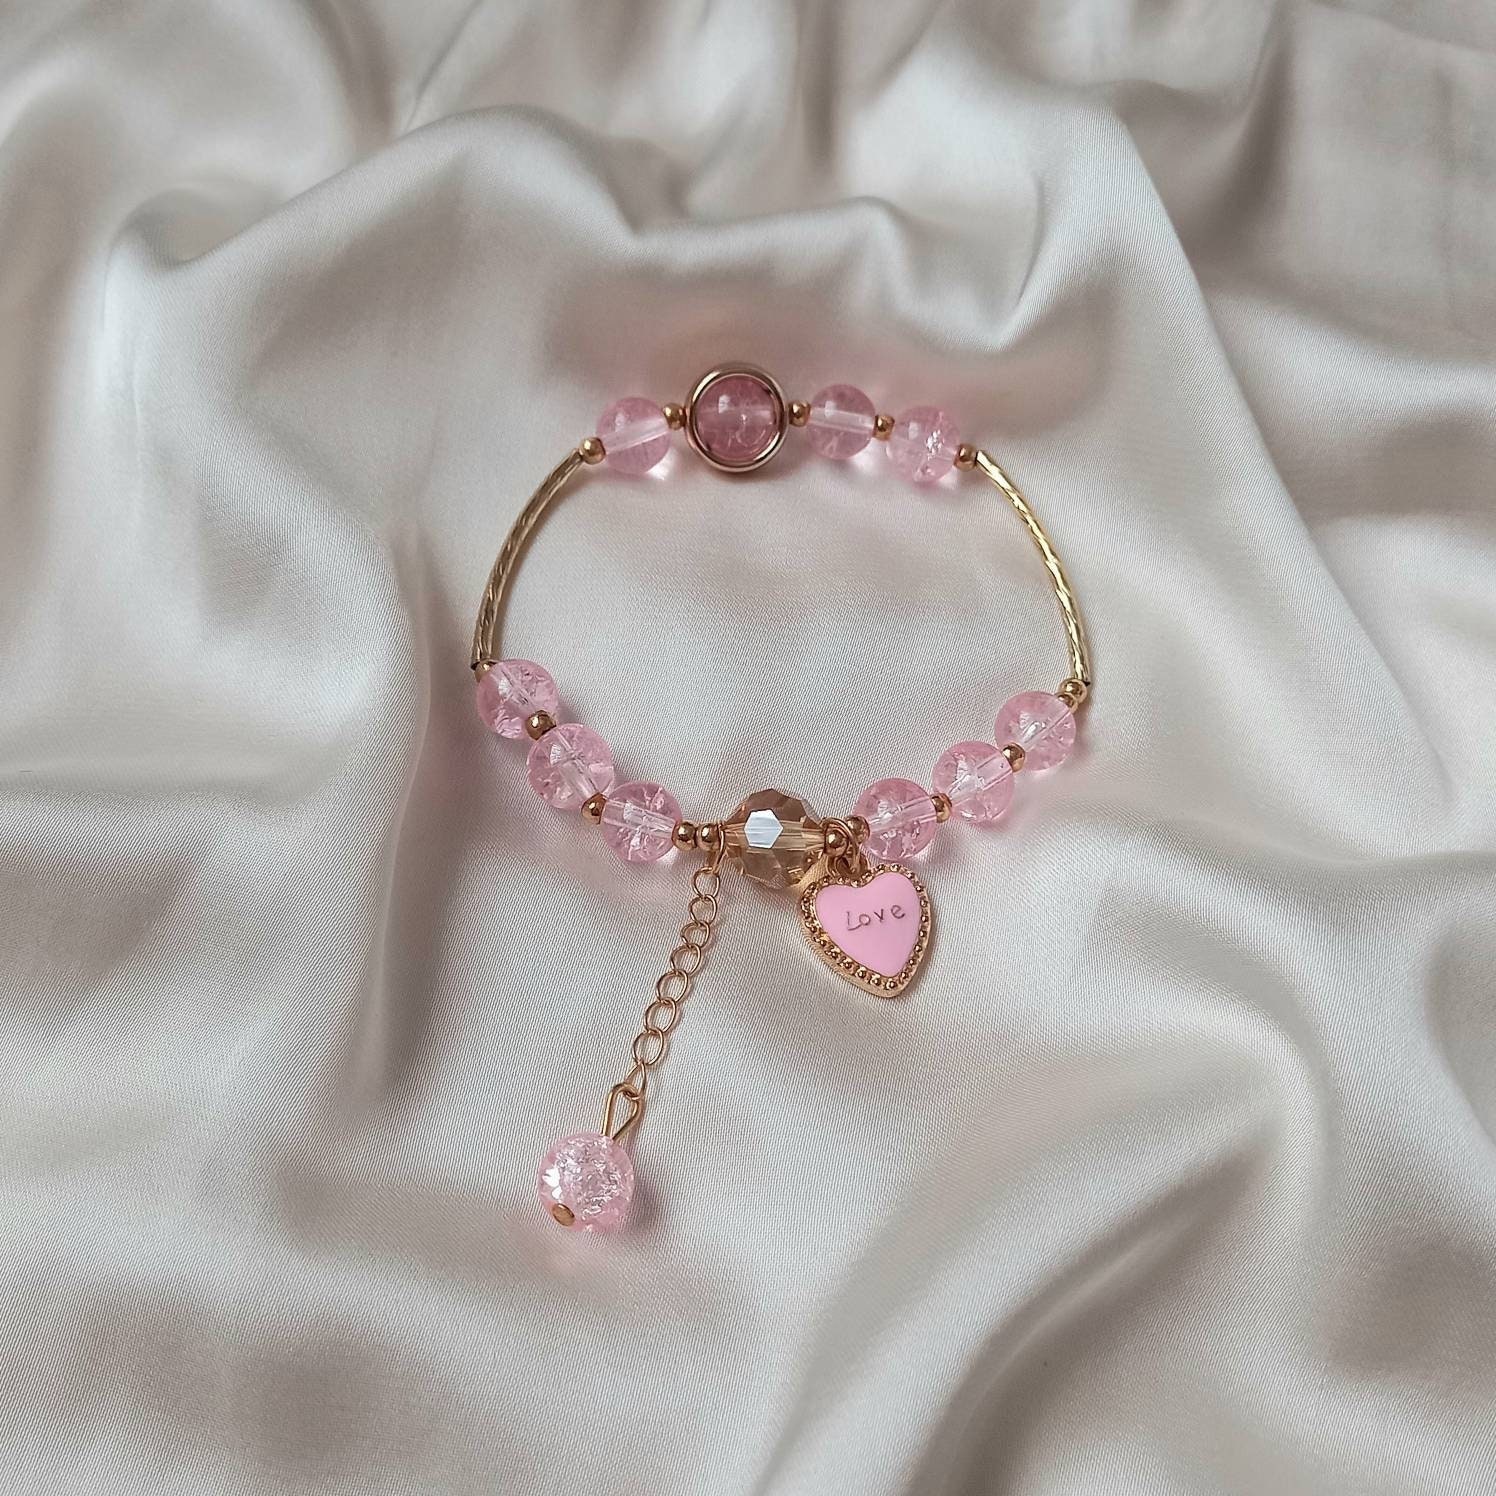 Seialoy Pink Heart Lock Key Charm Bracelets For Women Original Round  Crystal Glass Beaded Bracelet Bangle Fashion Jewelry Gifts